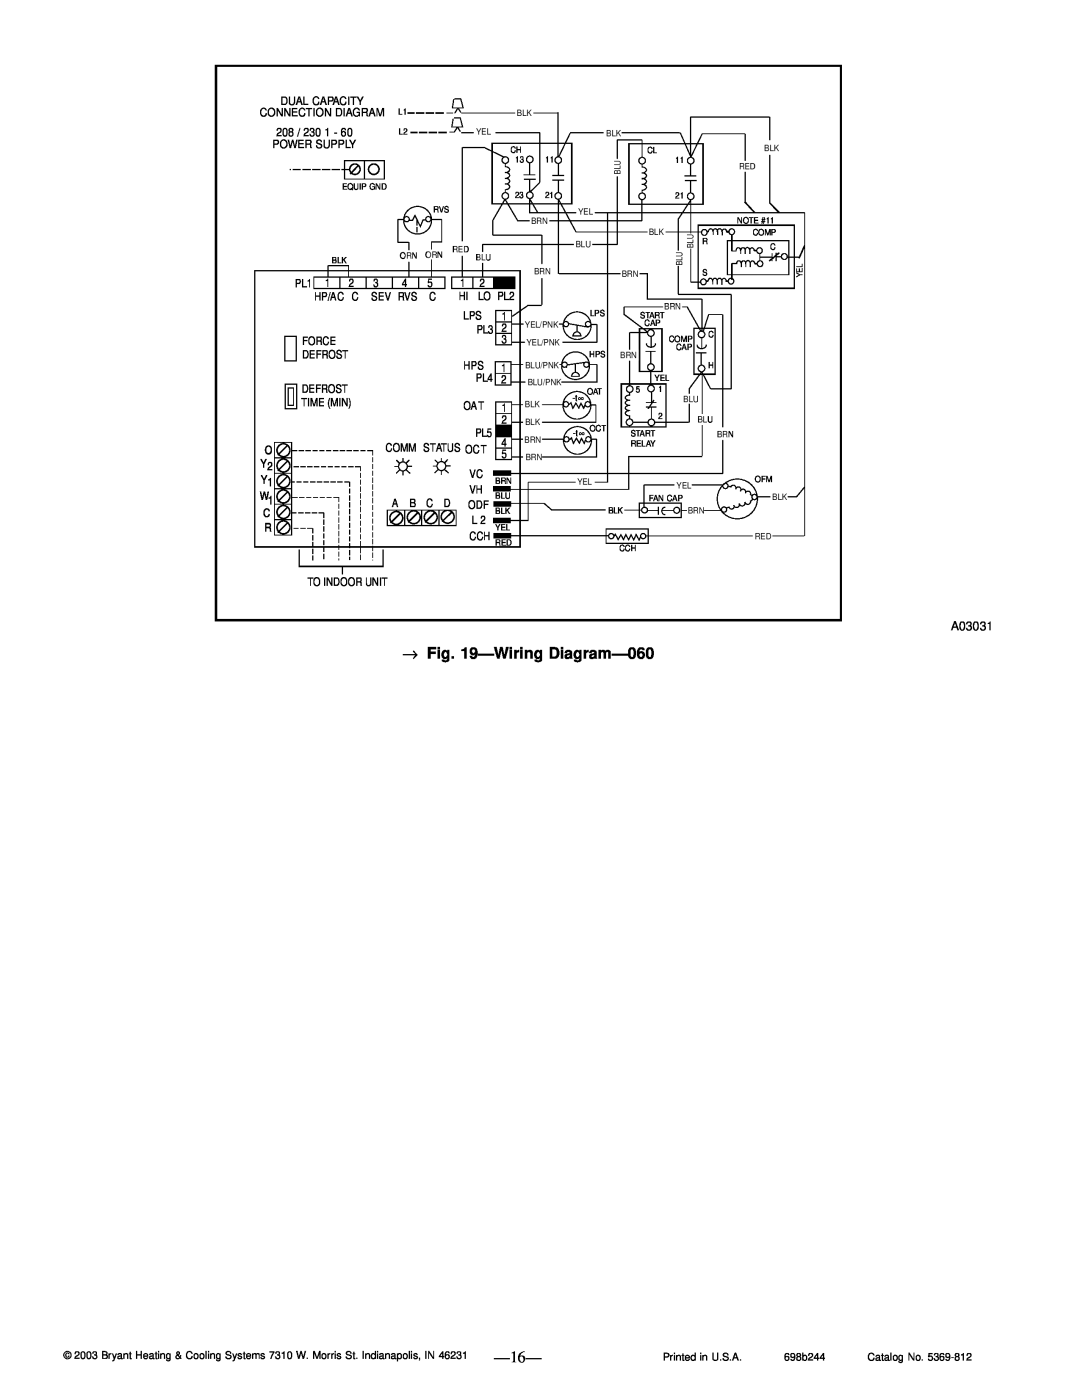 Bryant 698B instruction manual Wiring Diagram-060 